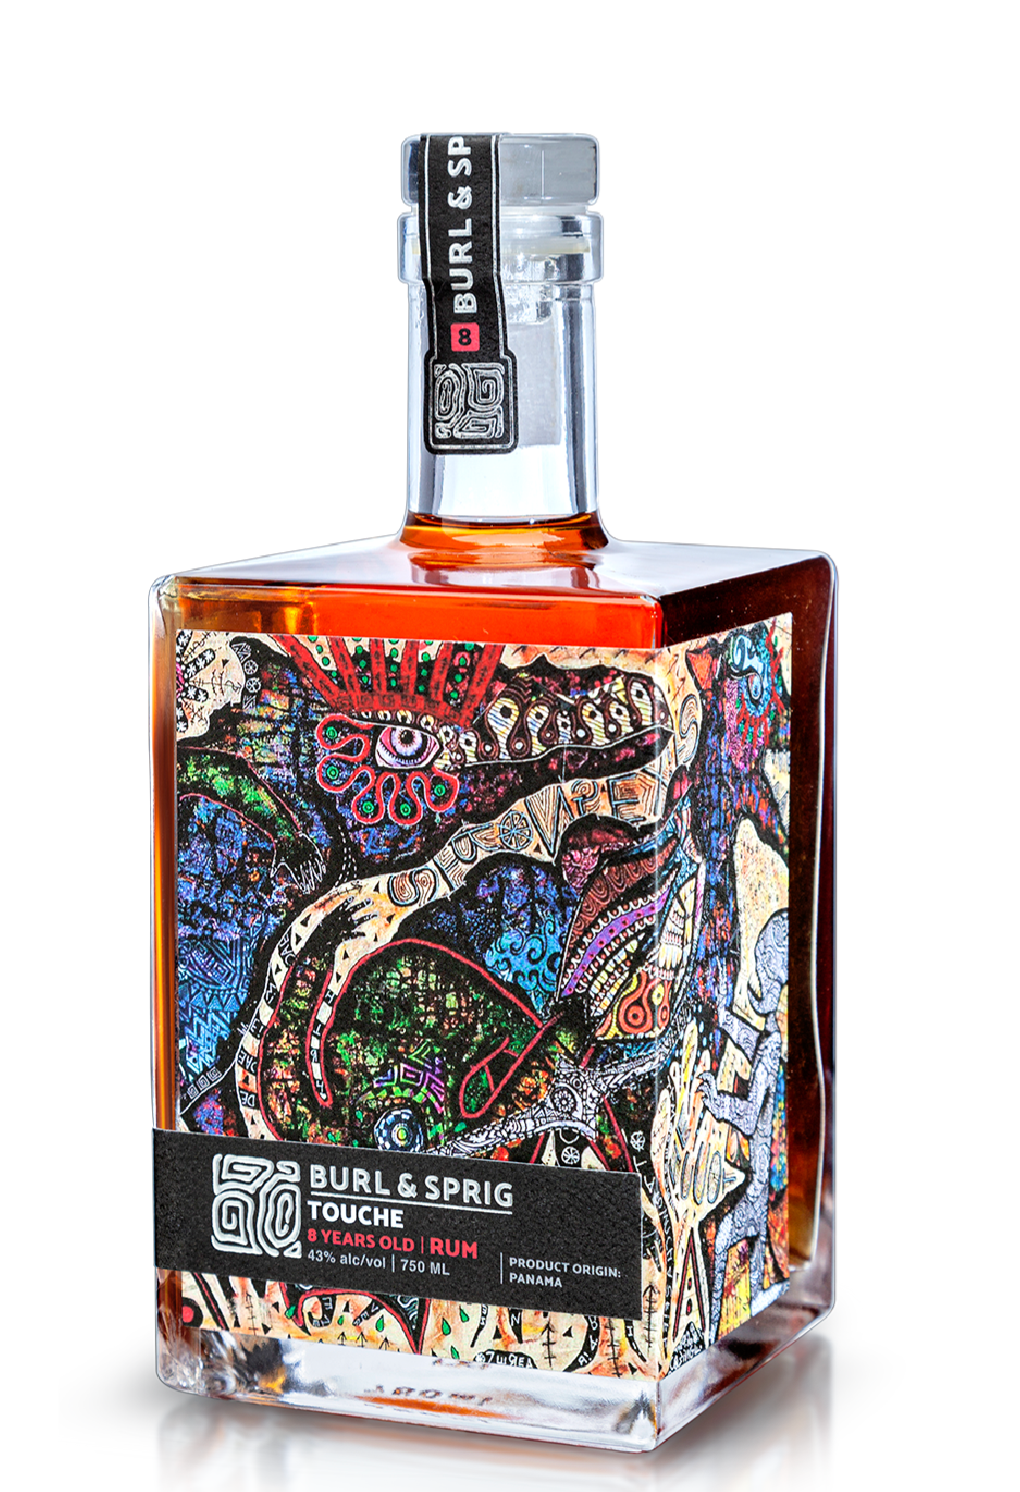 Burl & Sprig 'Touche' 8 Year Old Rum, Panama (750ml) – Woods Wholesale Wine